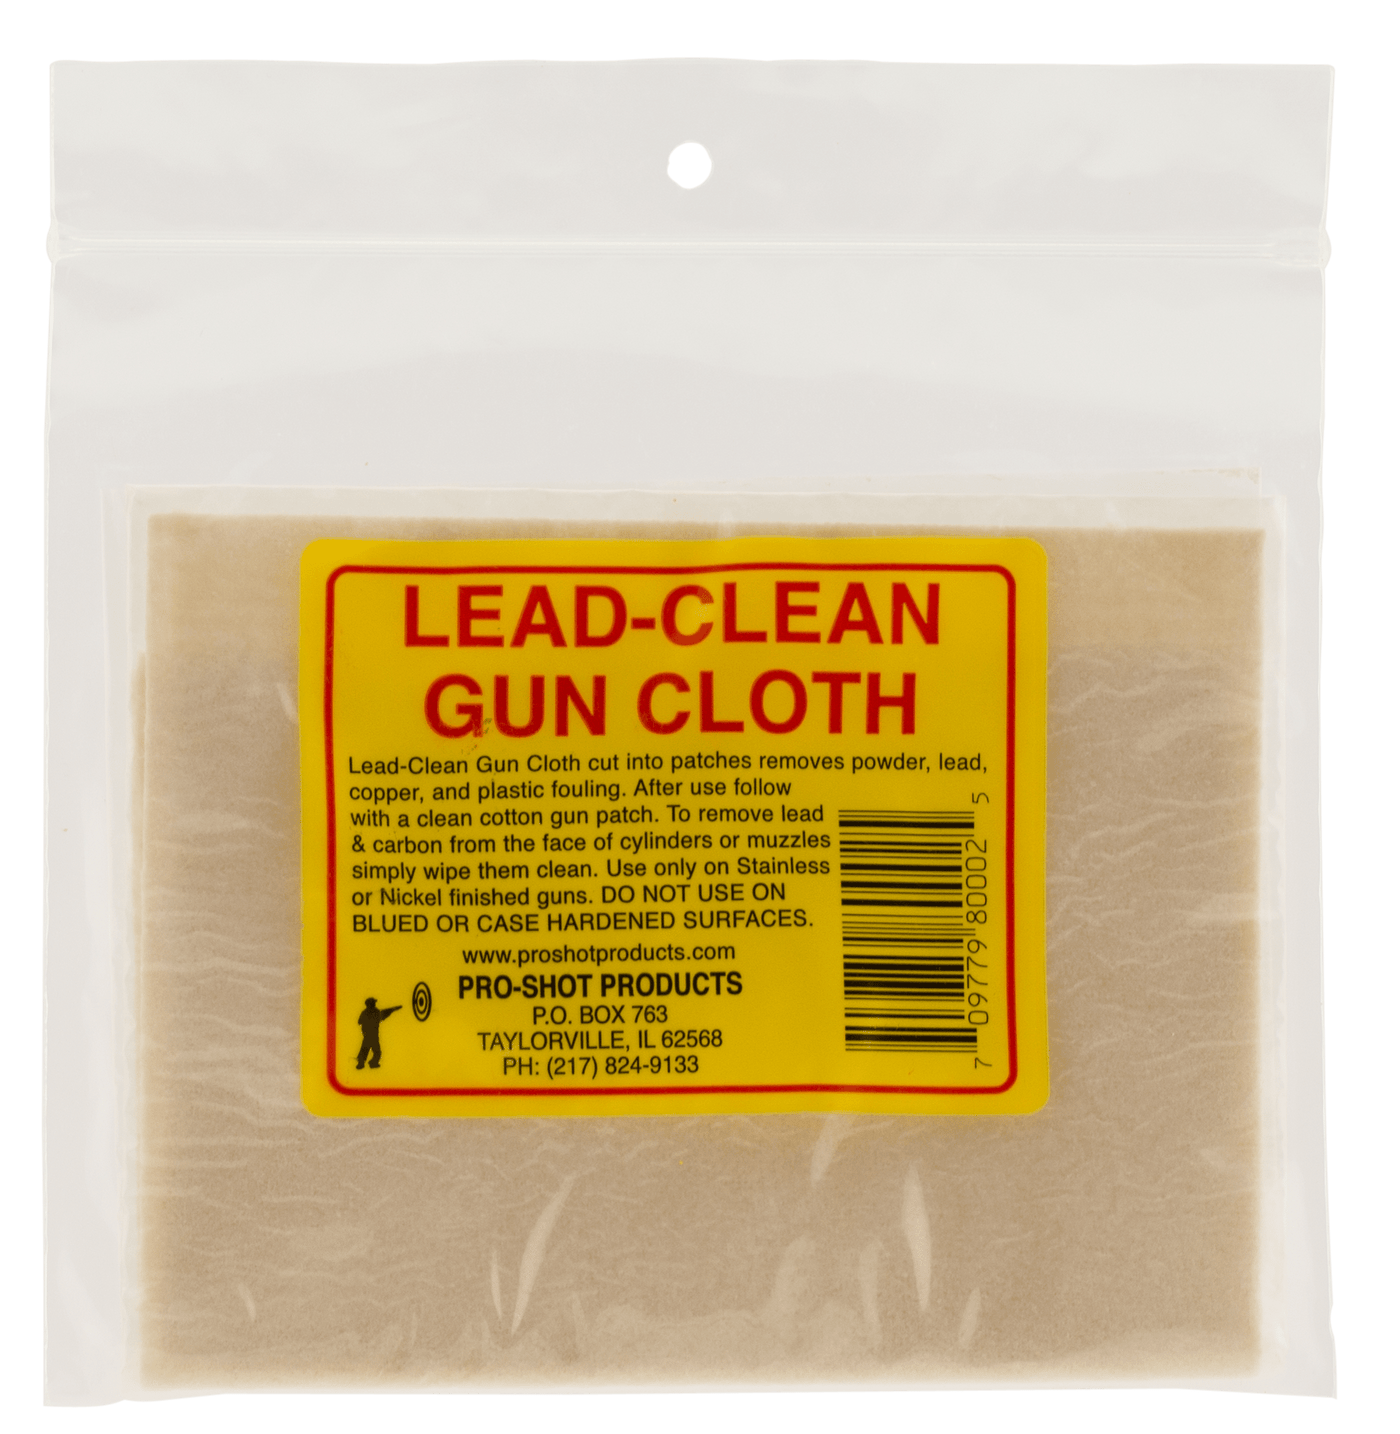 Pro-Shot Pro-shot Lead Clean, Proshot Lcc            Lead Clean Gun Cloth Gun Care